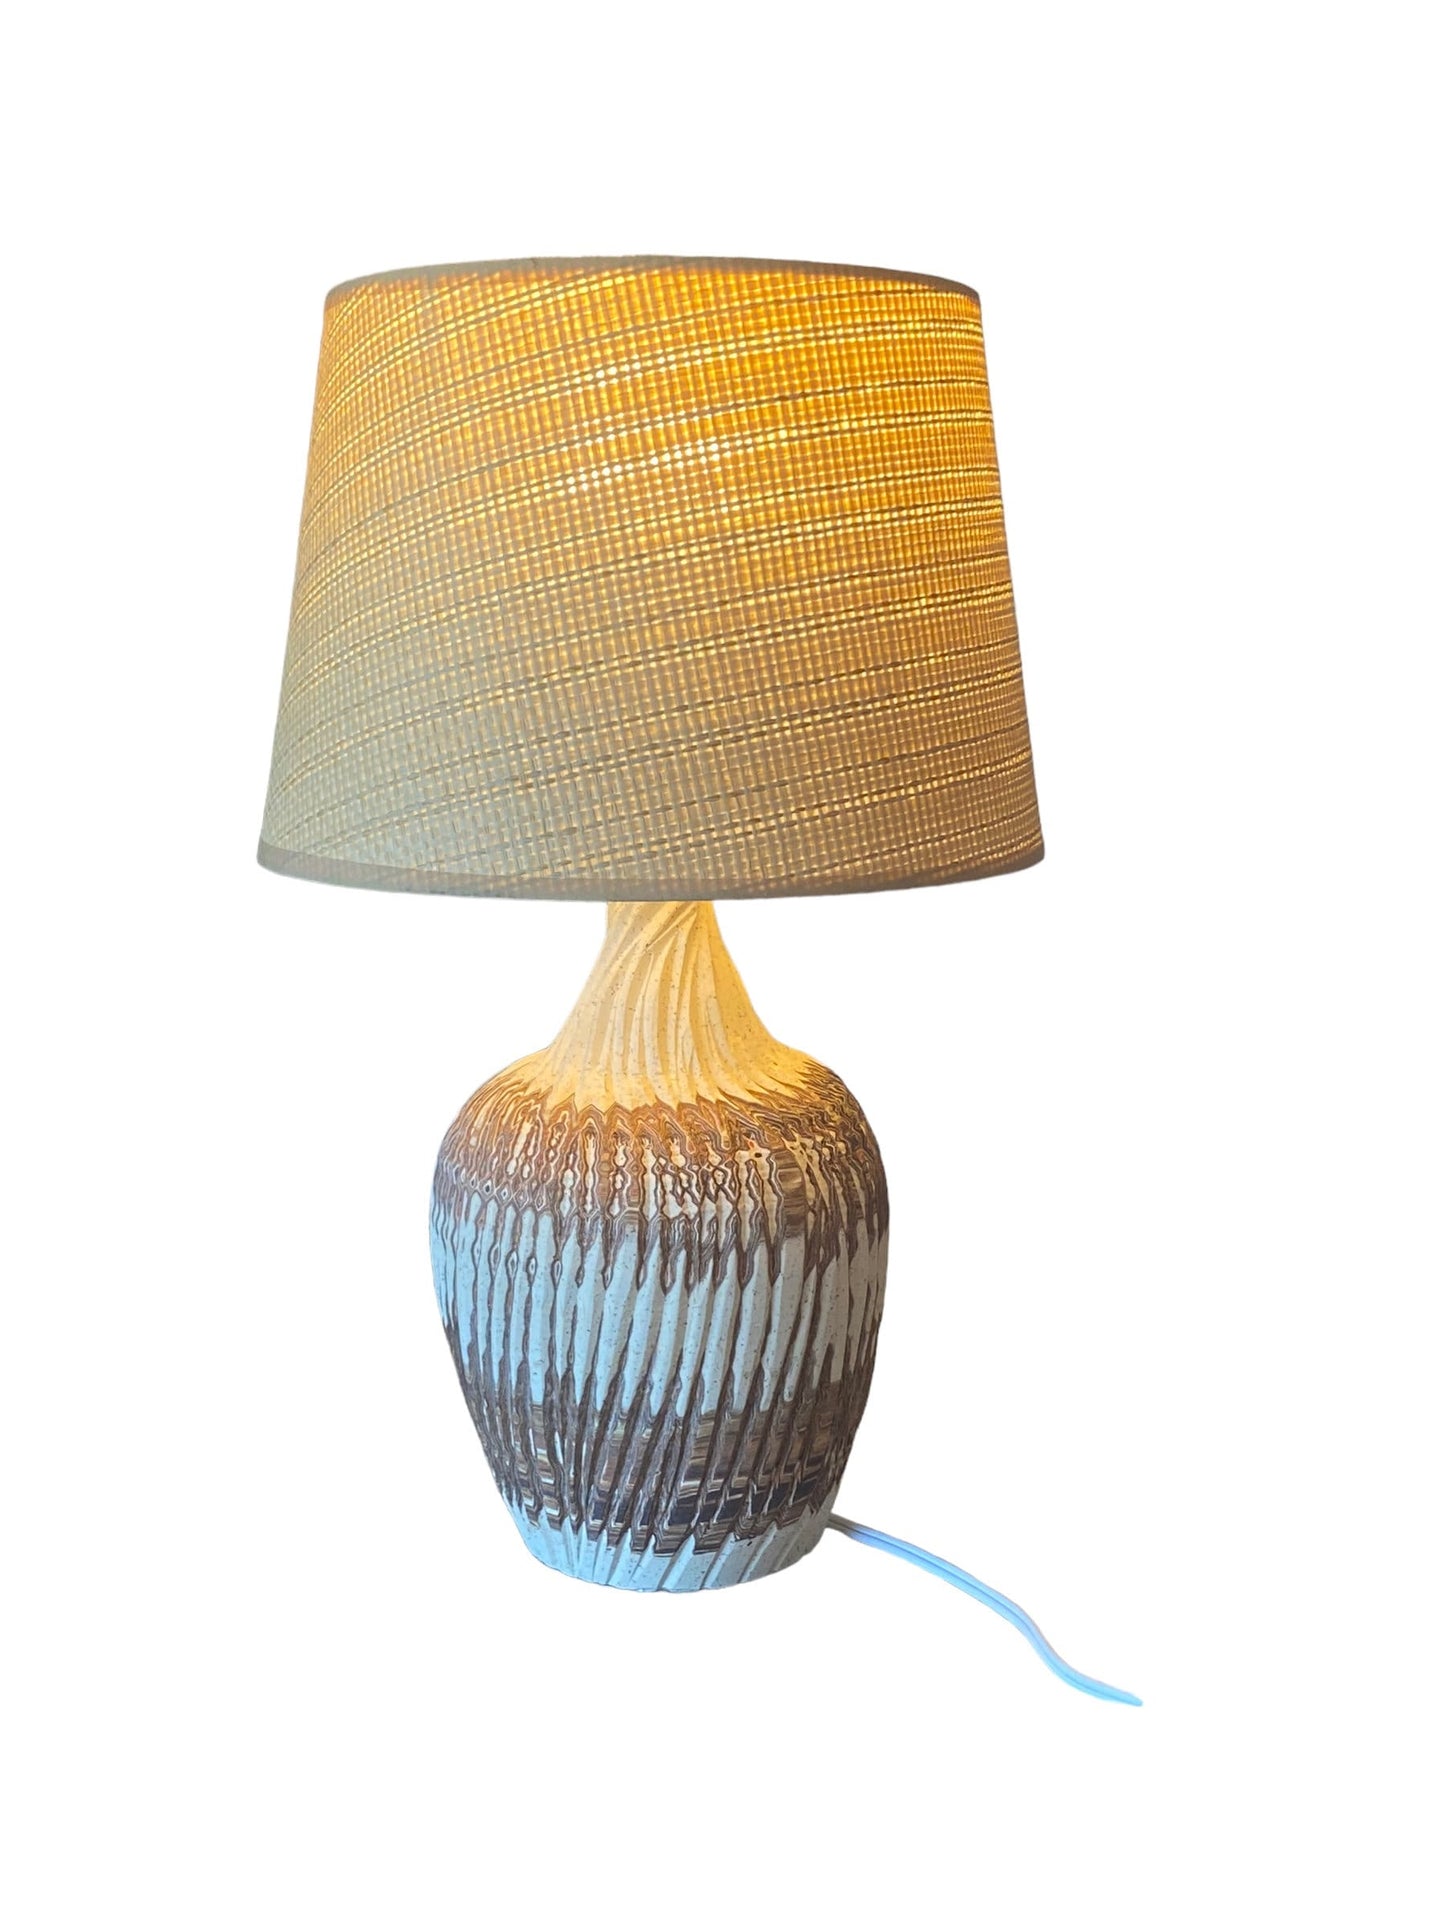 Handmade Agateware Pottery Table Lamp: Unique Studio Art Pieces for Your Home Décor